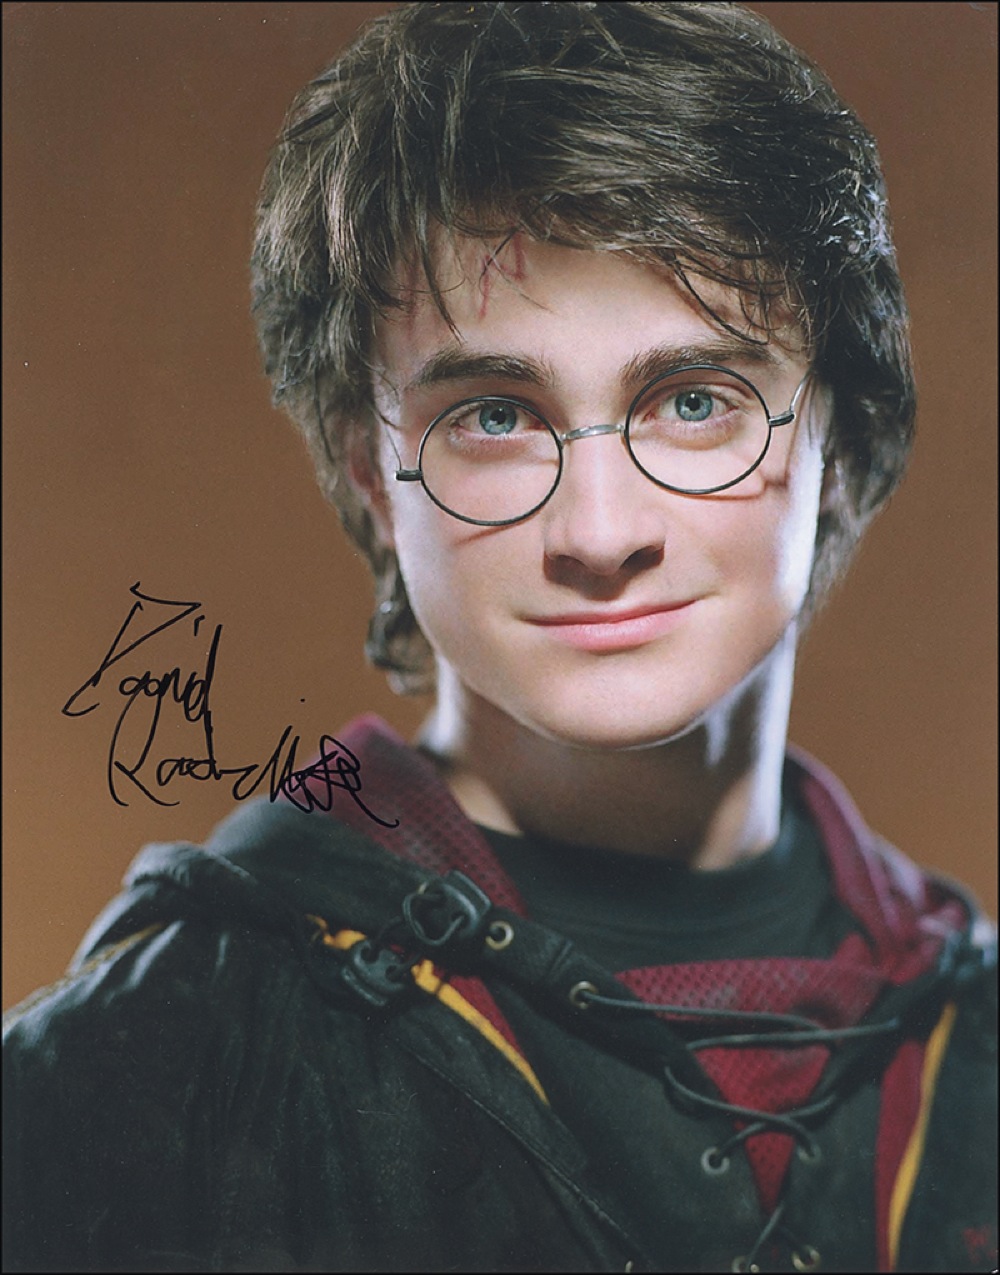 Lot #1039 Harry Potter: Daniel Radcliffe